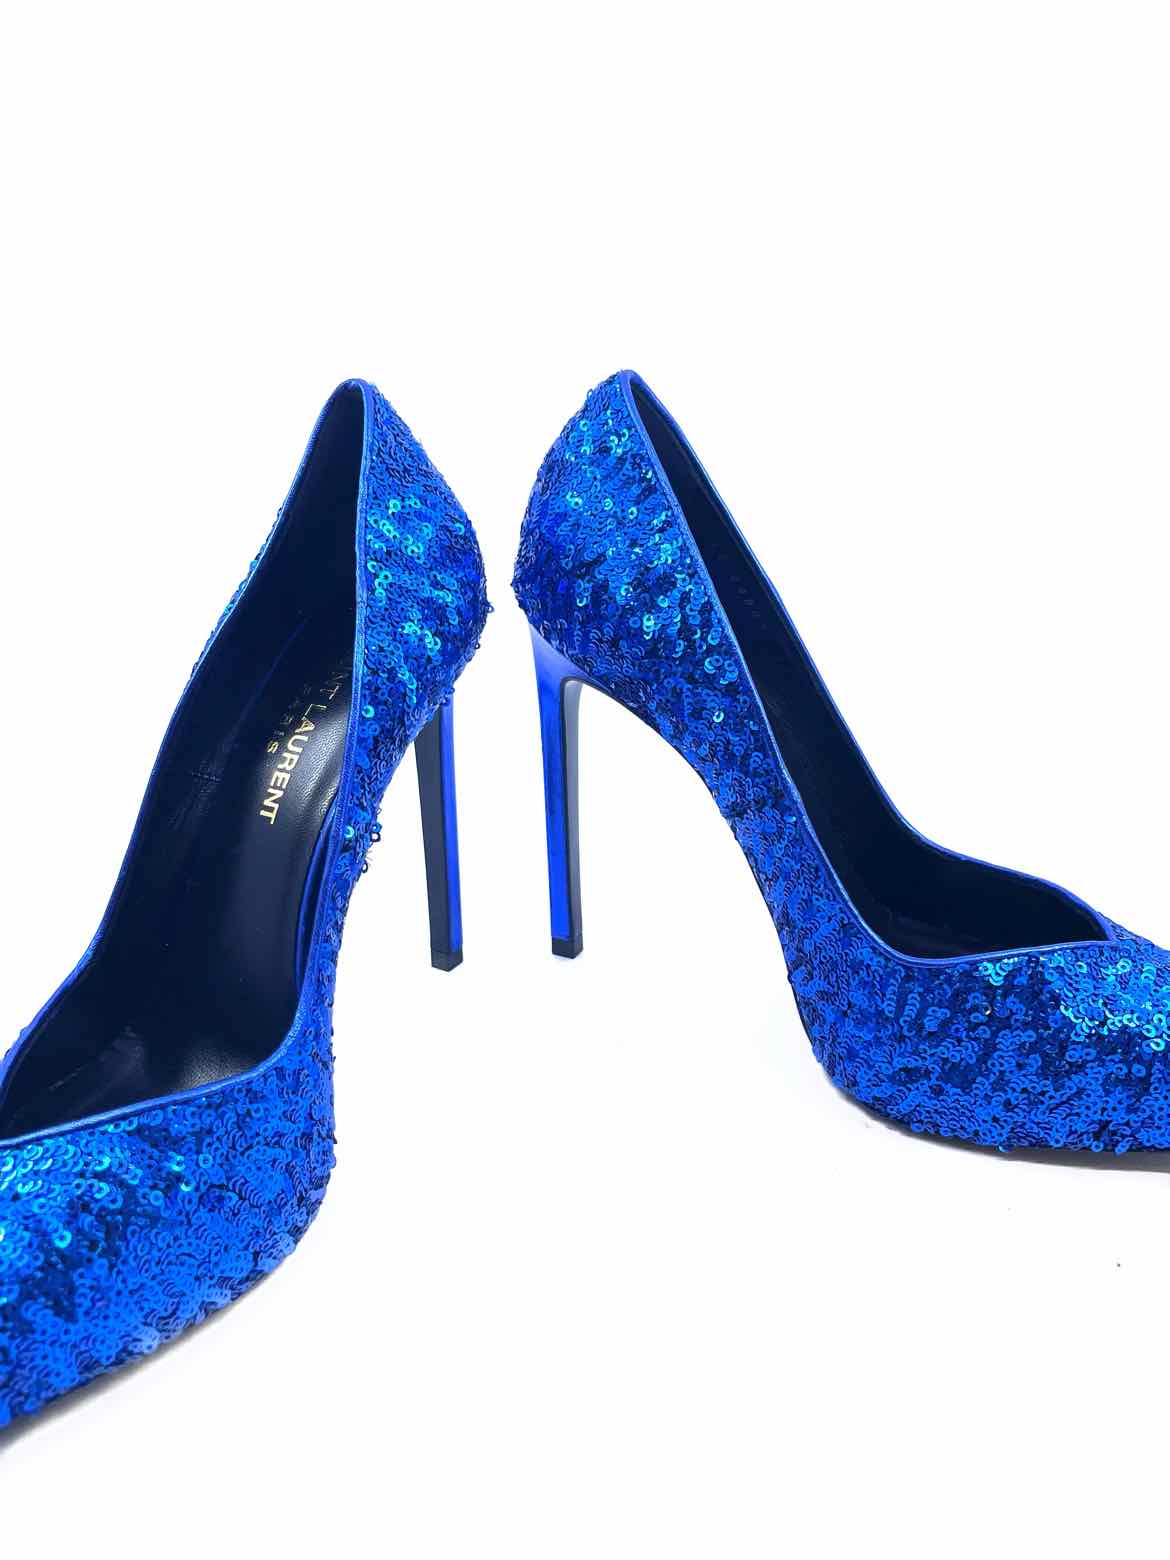 ADORE-709GP - Platform high heel sandal - blue shiny with glitter | Pleaser  buy cheap online!